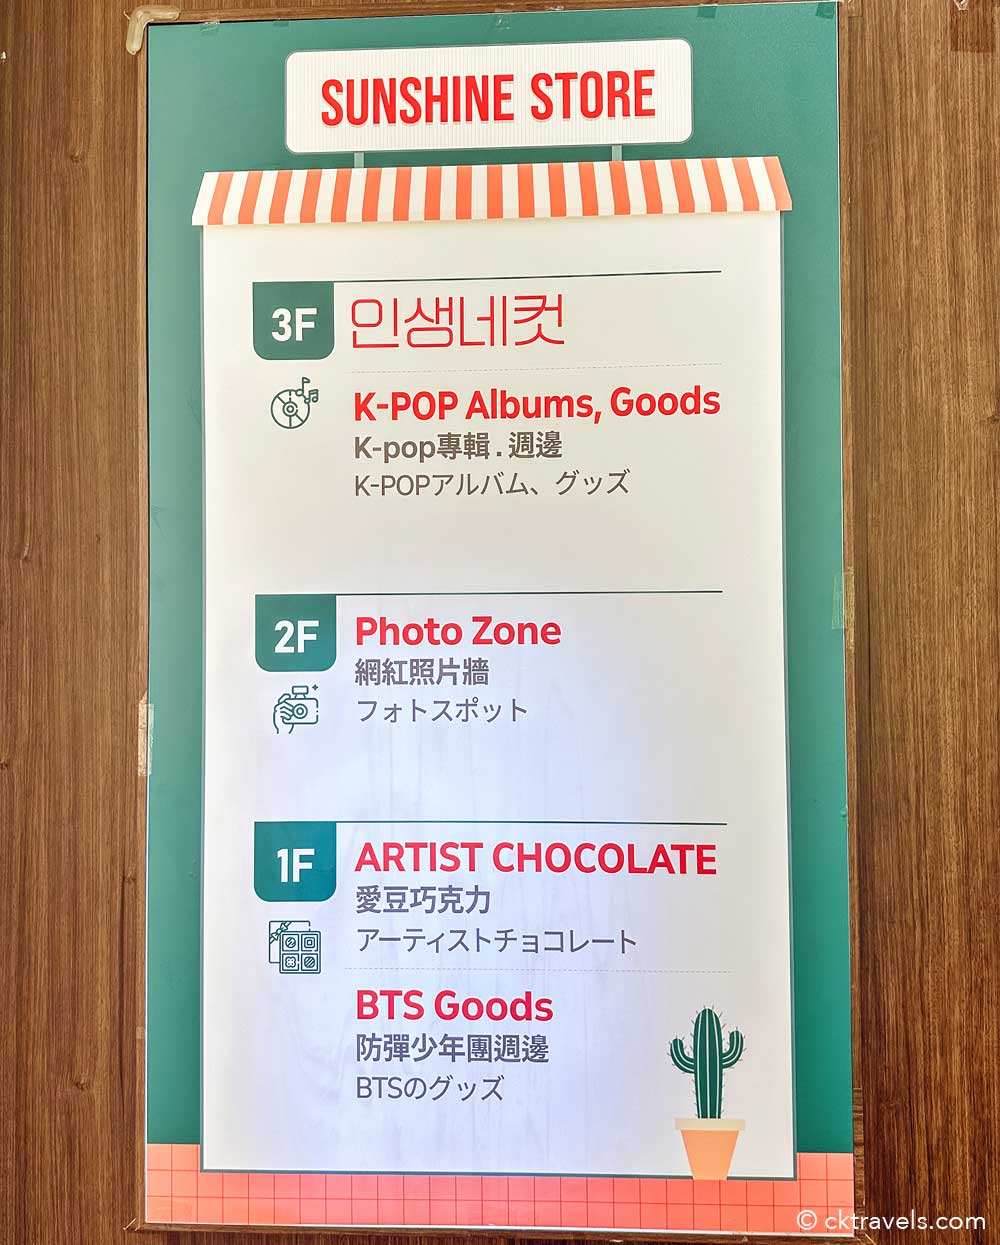 Starfox Artist Chocolate Shop in Myeongdong, Sunshine Myeong-dong Branch Seoul South Korea